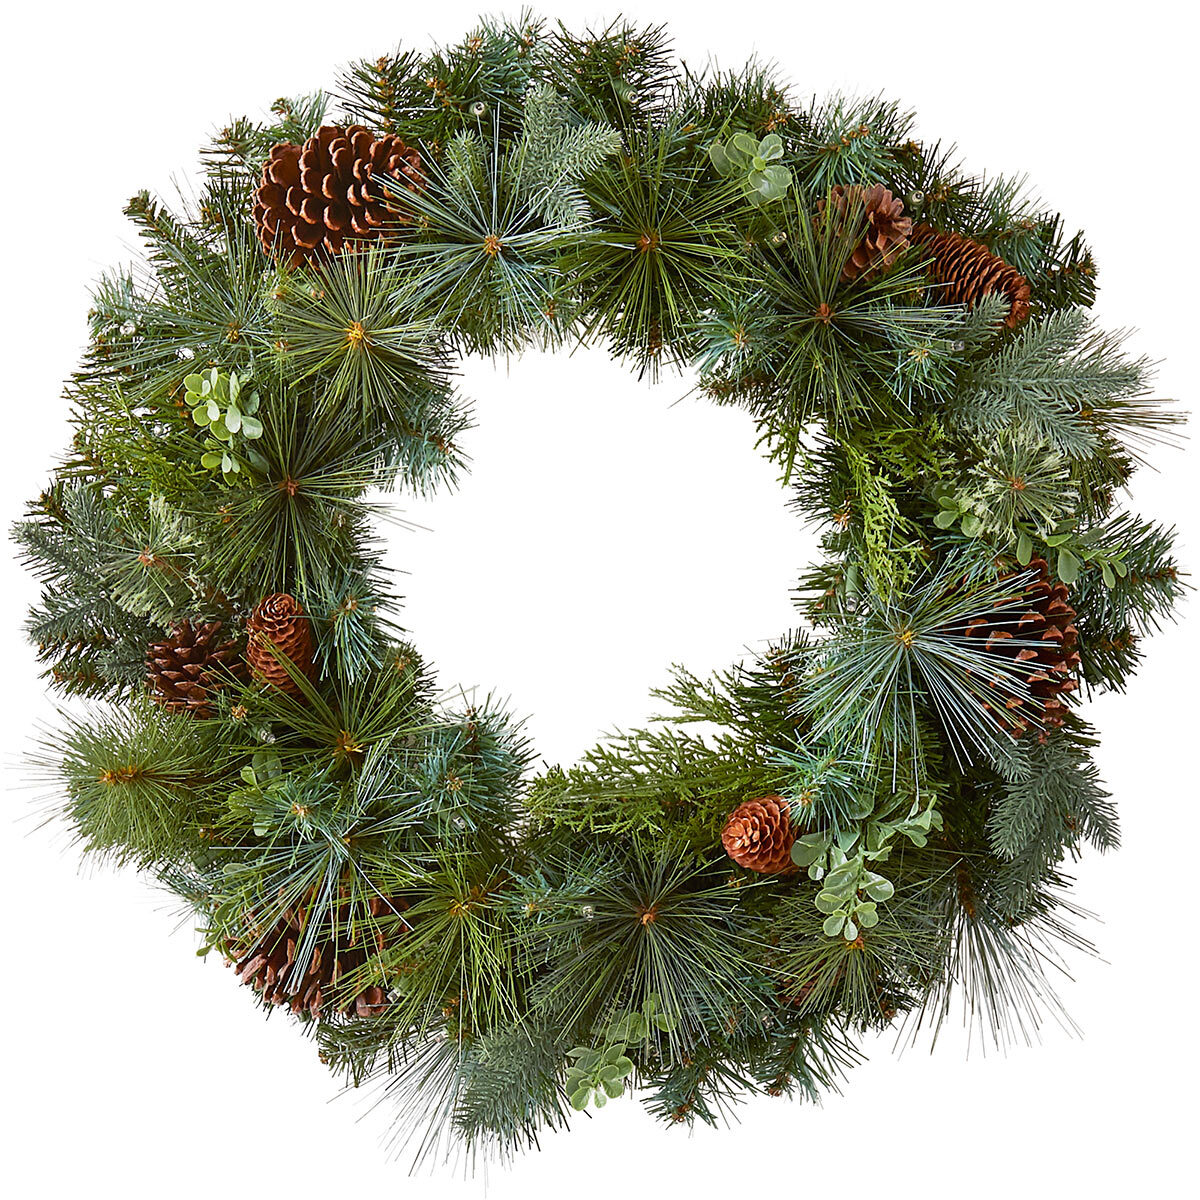 Buy 24" Greenery Wreath Close-Up3 Image at Costco.co.uk